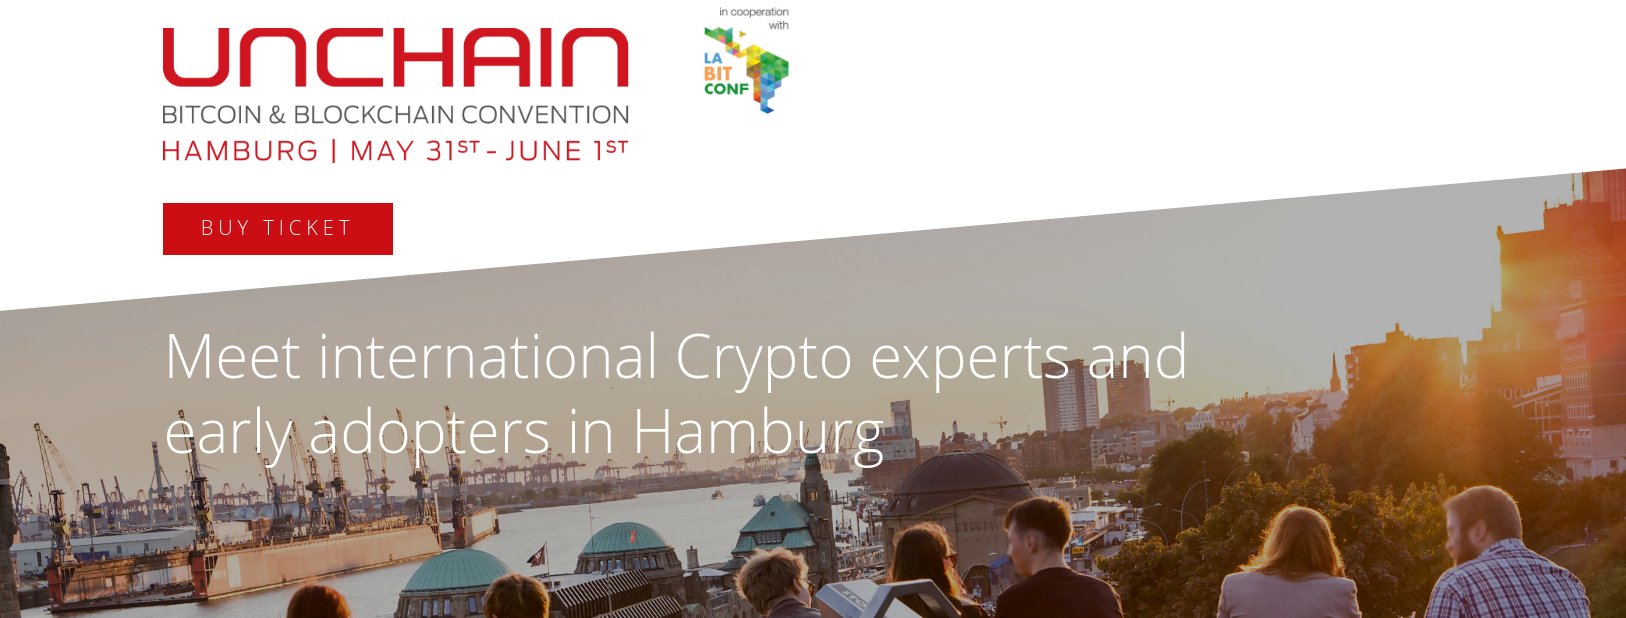 unchain - bitcoin & blockchain conference